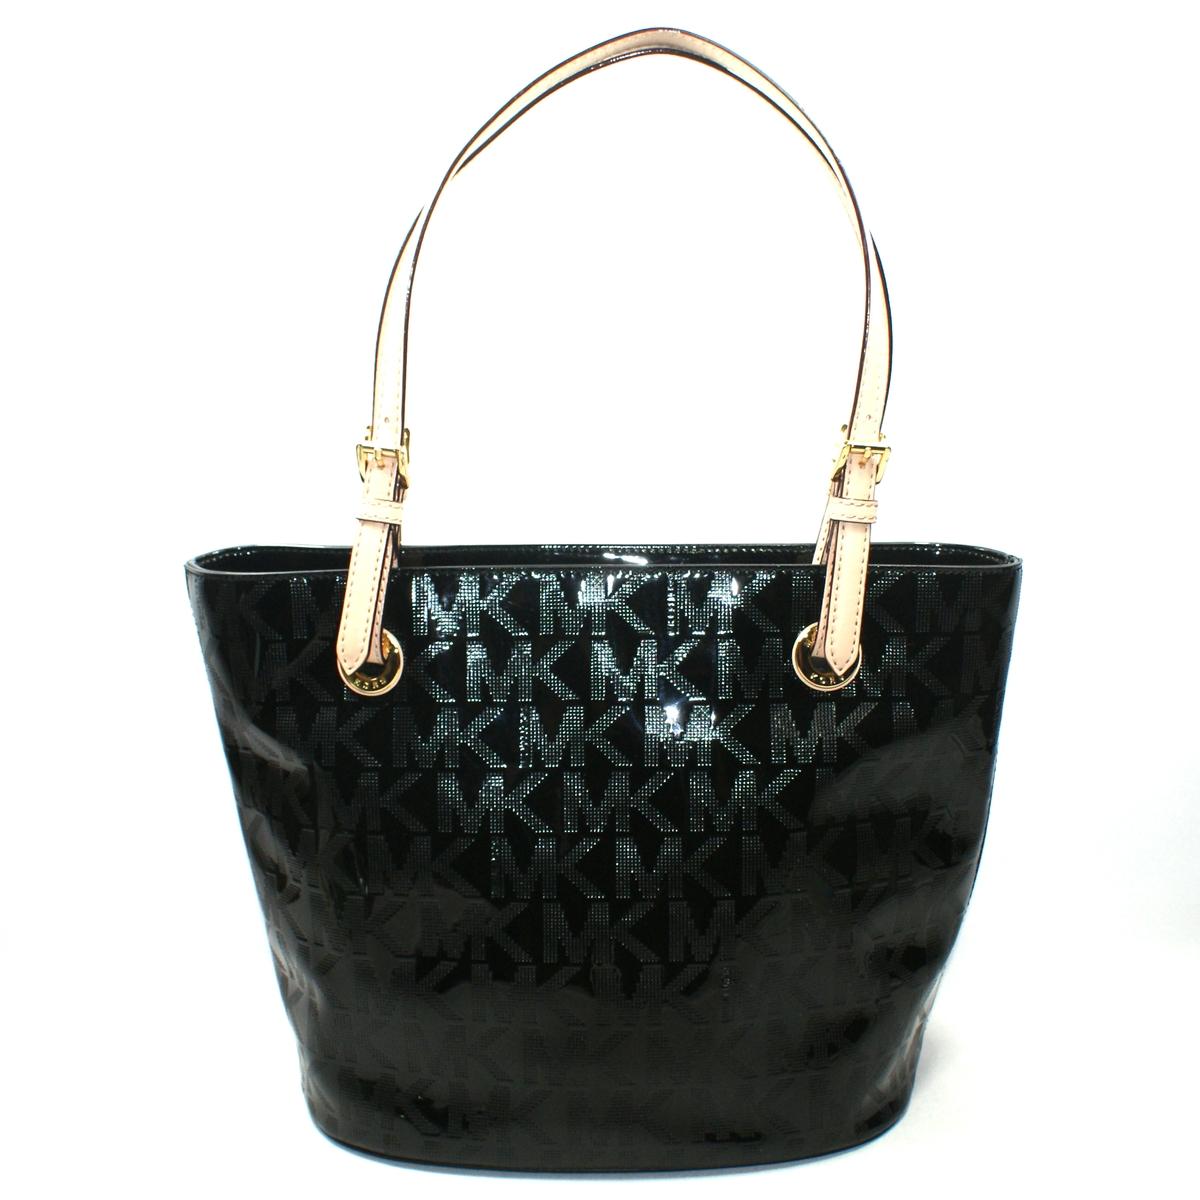 black patent leather mk purse